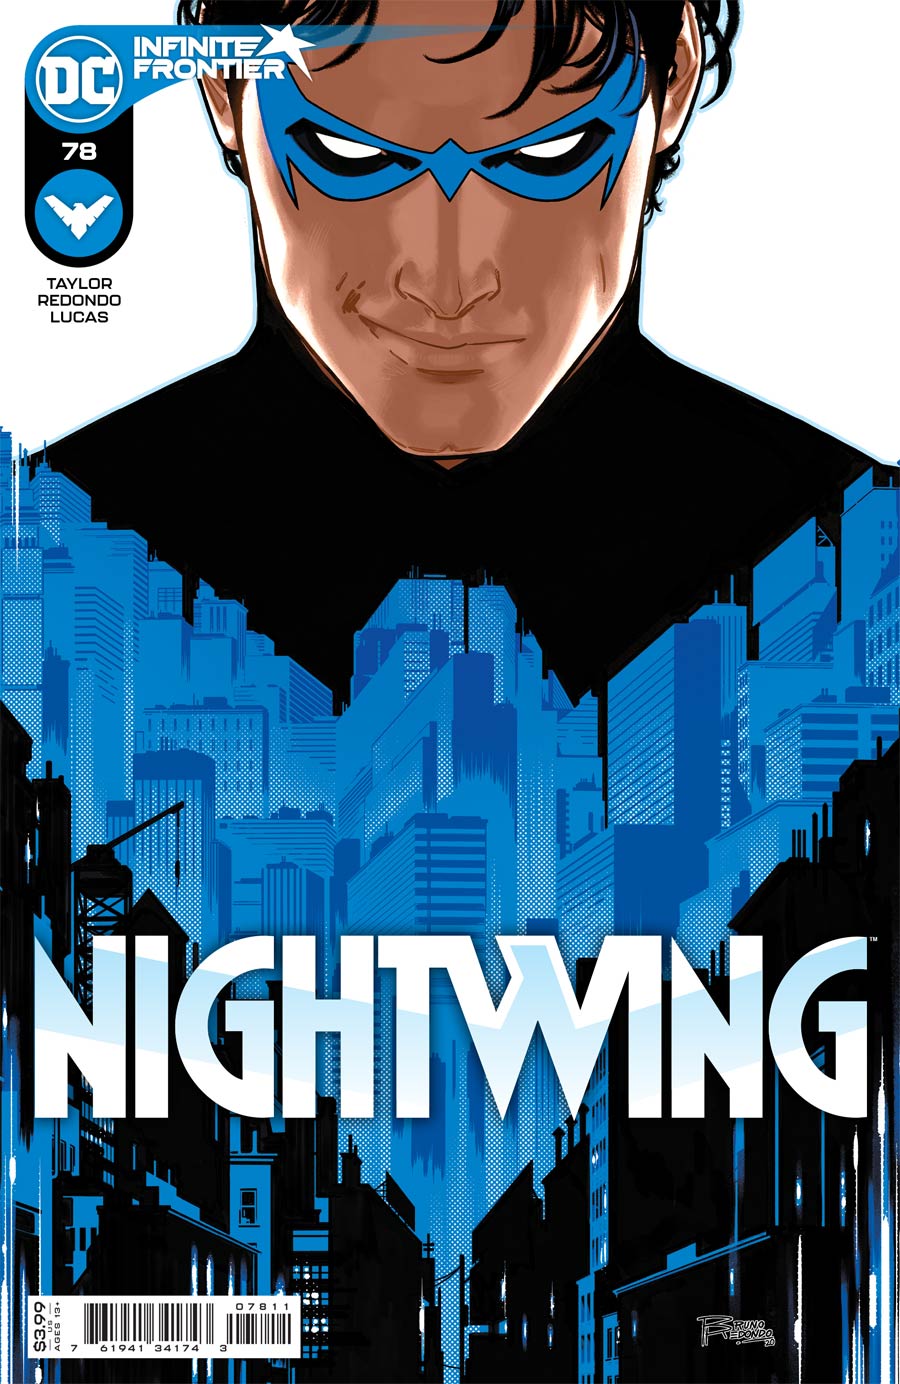 Nightwing Vol 4 #78 Cover A Regular Bruno Redondo Cover